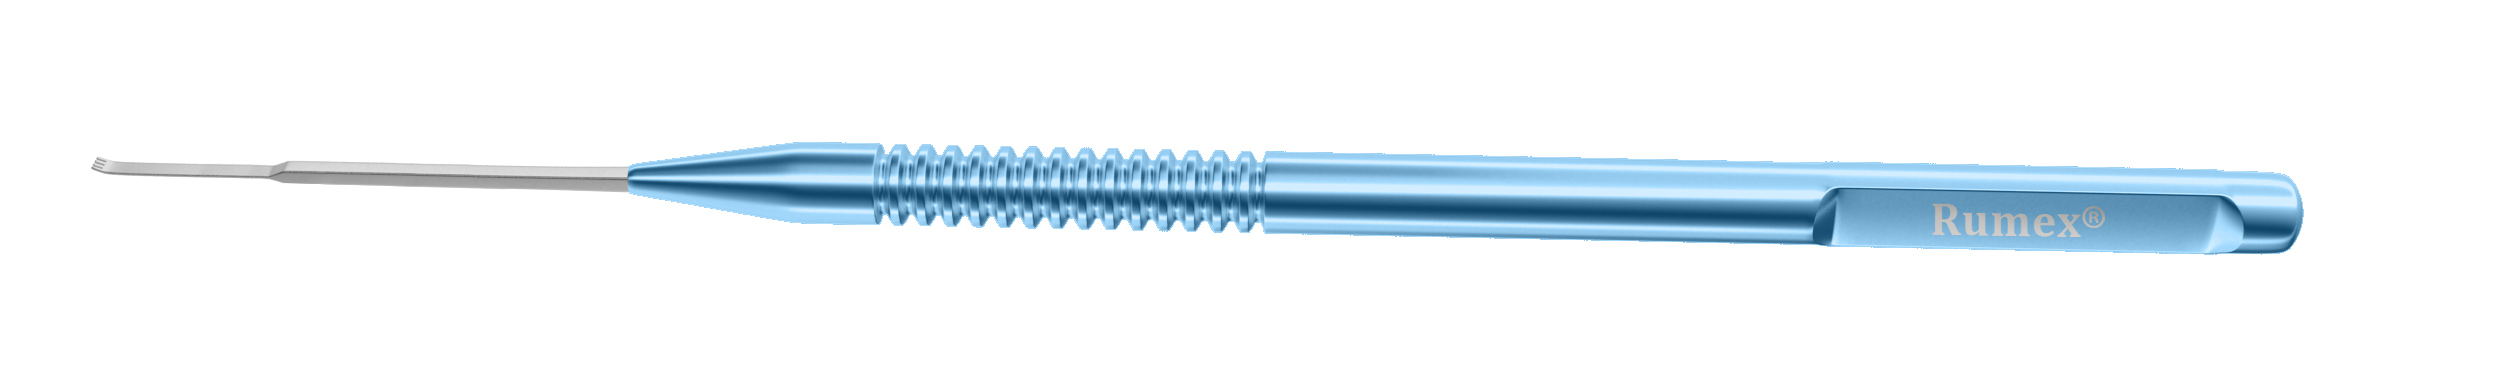 889R 13-092 Membrane Scratcher, 20 Ga, Length 135 mm, Round Titanium Handle